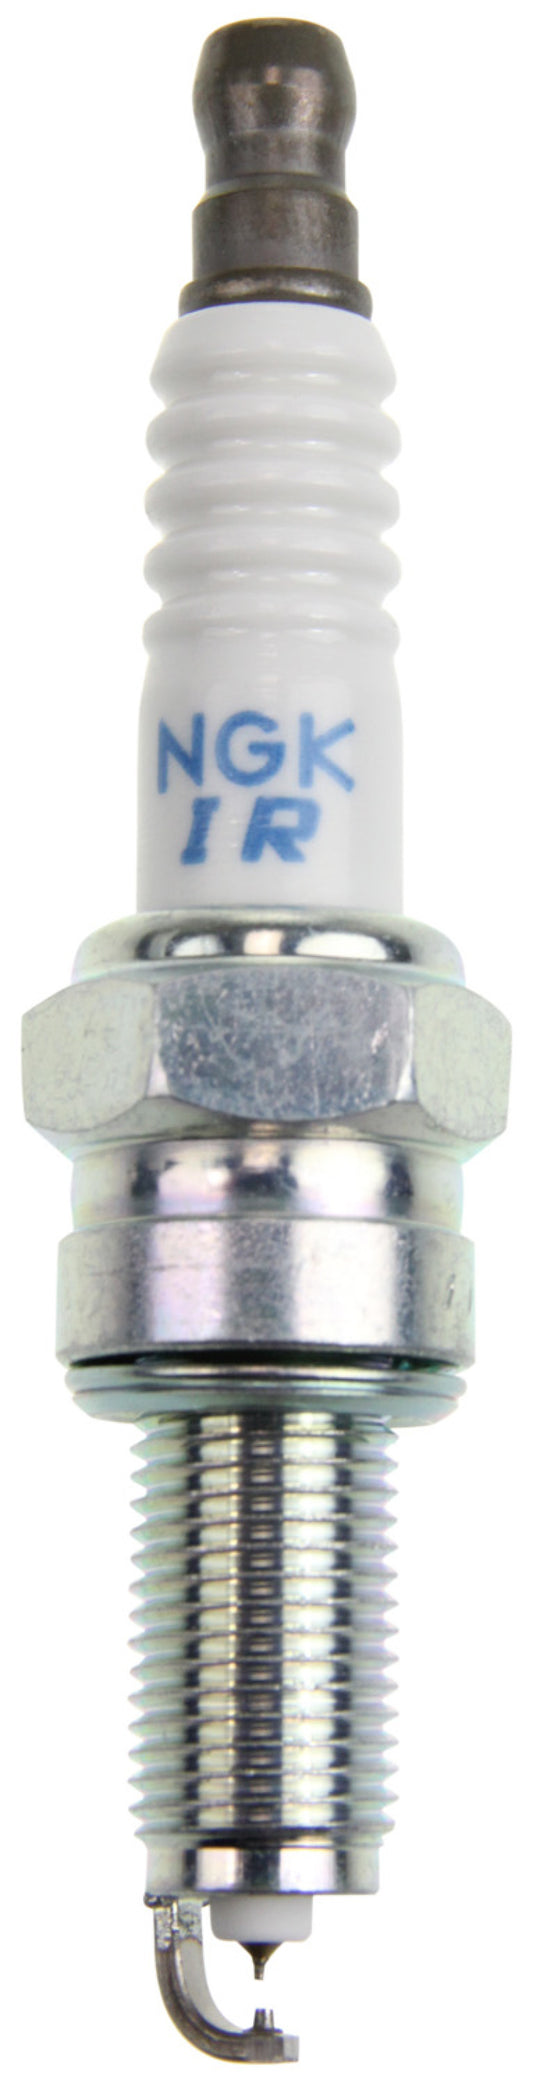 NGK Laser Iridium Spark Plug Box of 4 (DIMR8C10)